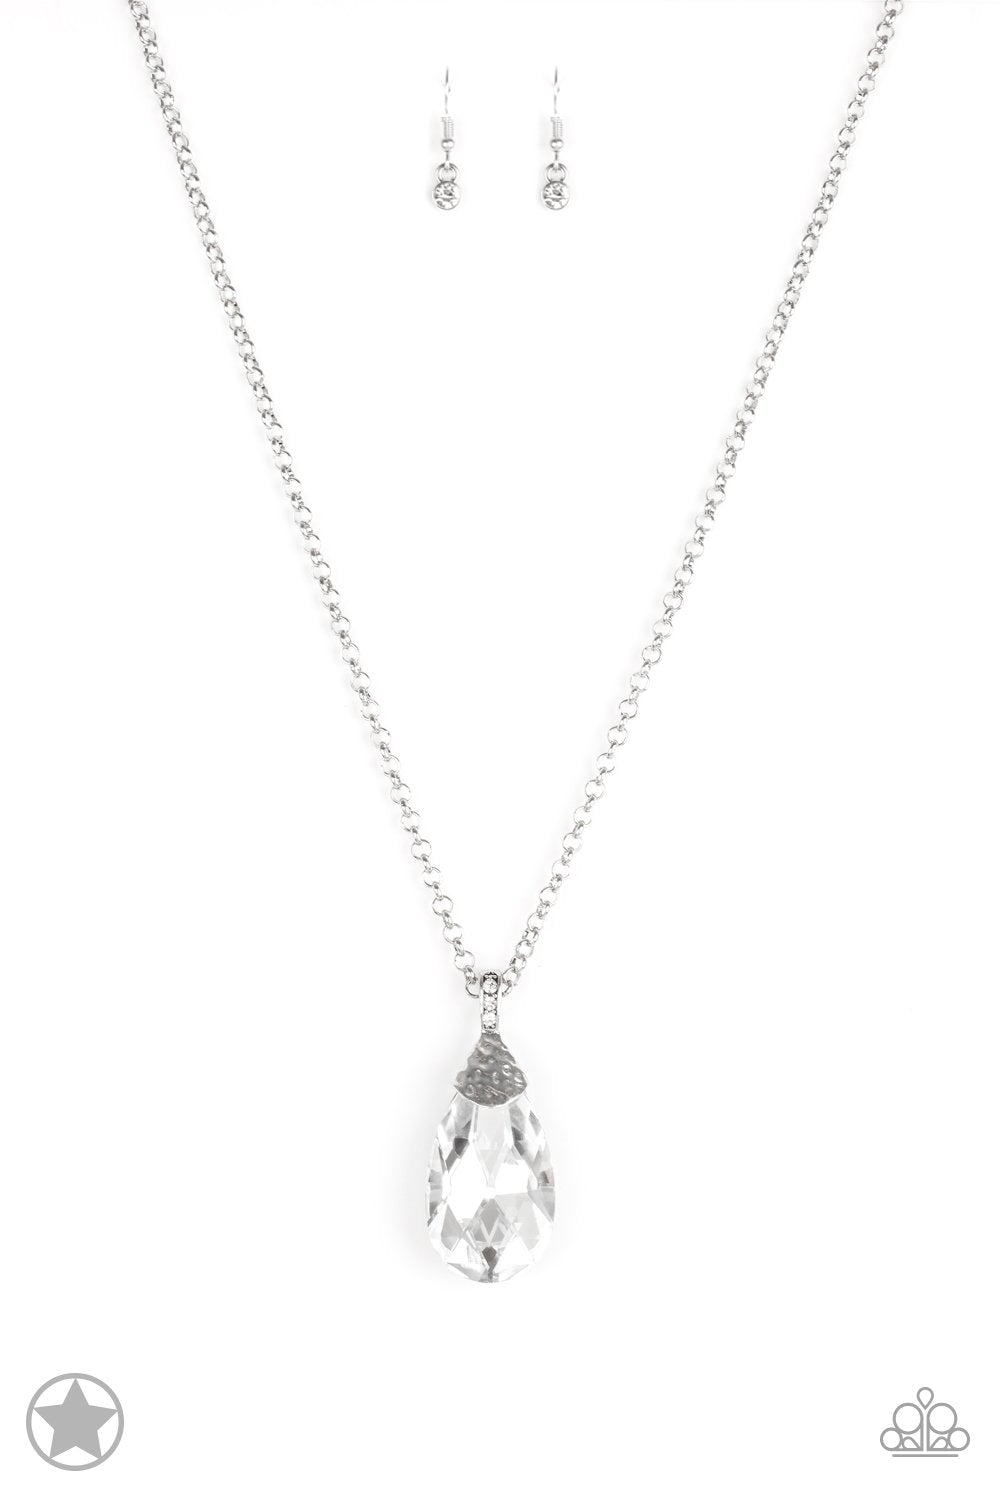 Spellbinding Sparkle - White (Rhinestone) Necklace freeshipping - JewLz4u Gemstone Gallery